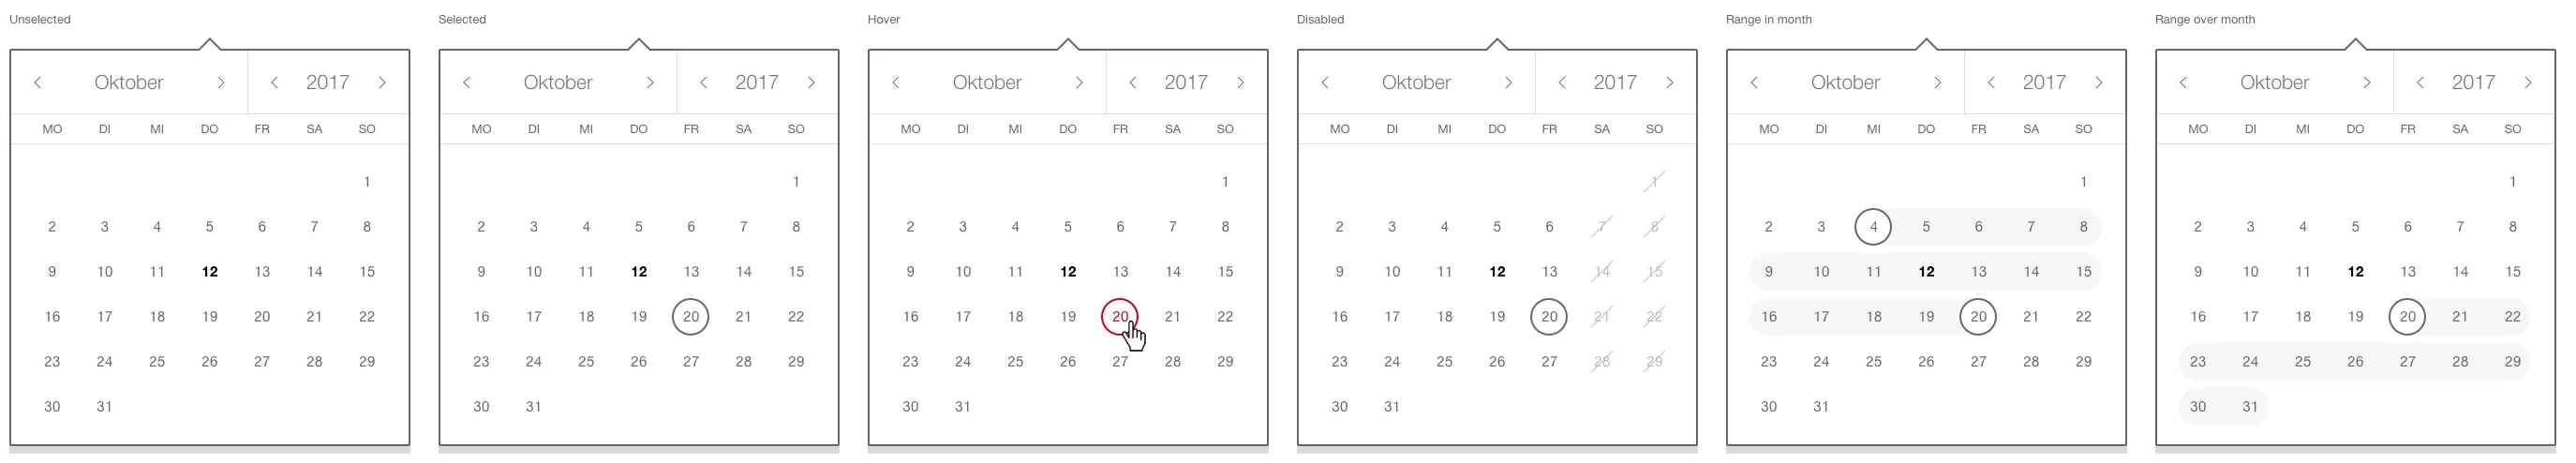 Image of a calendar layer